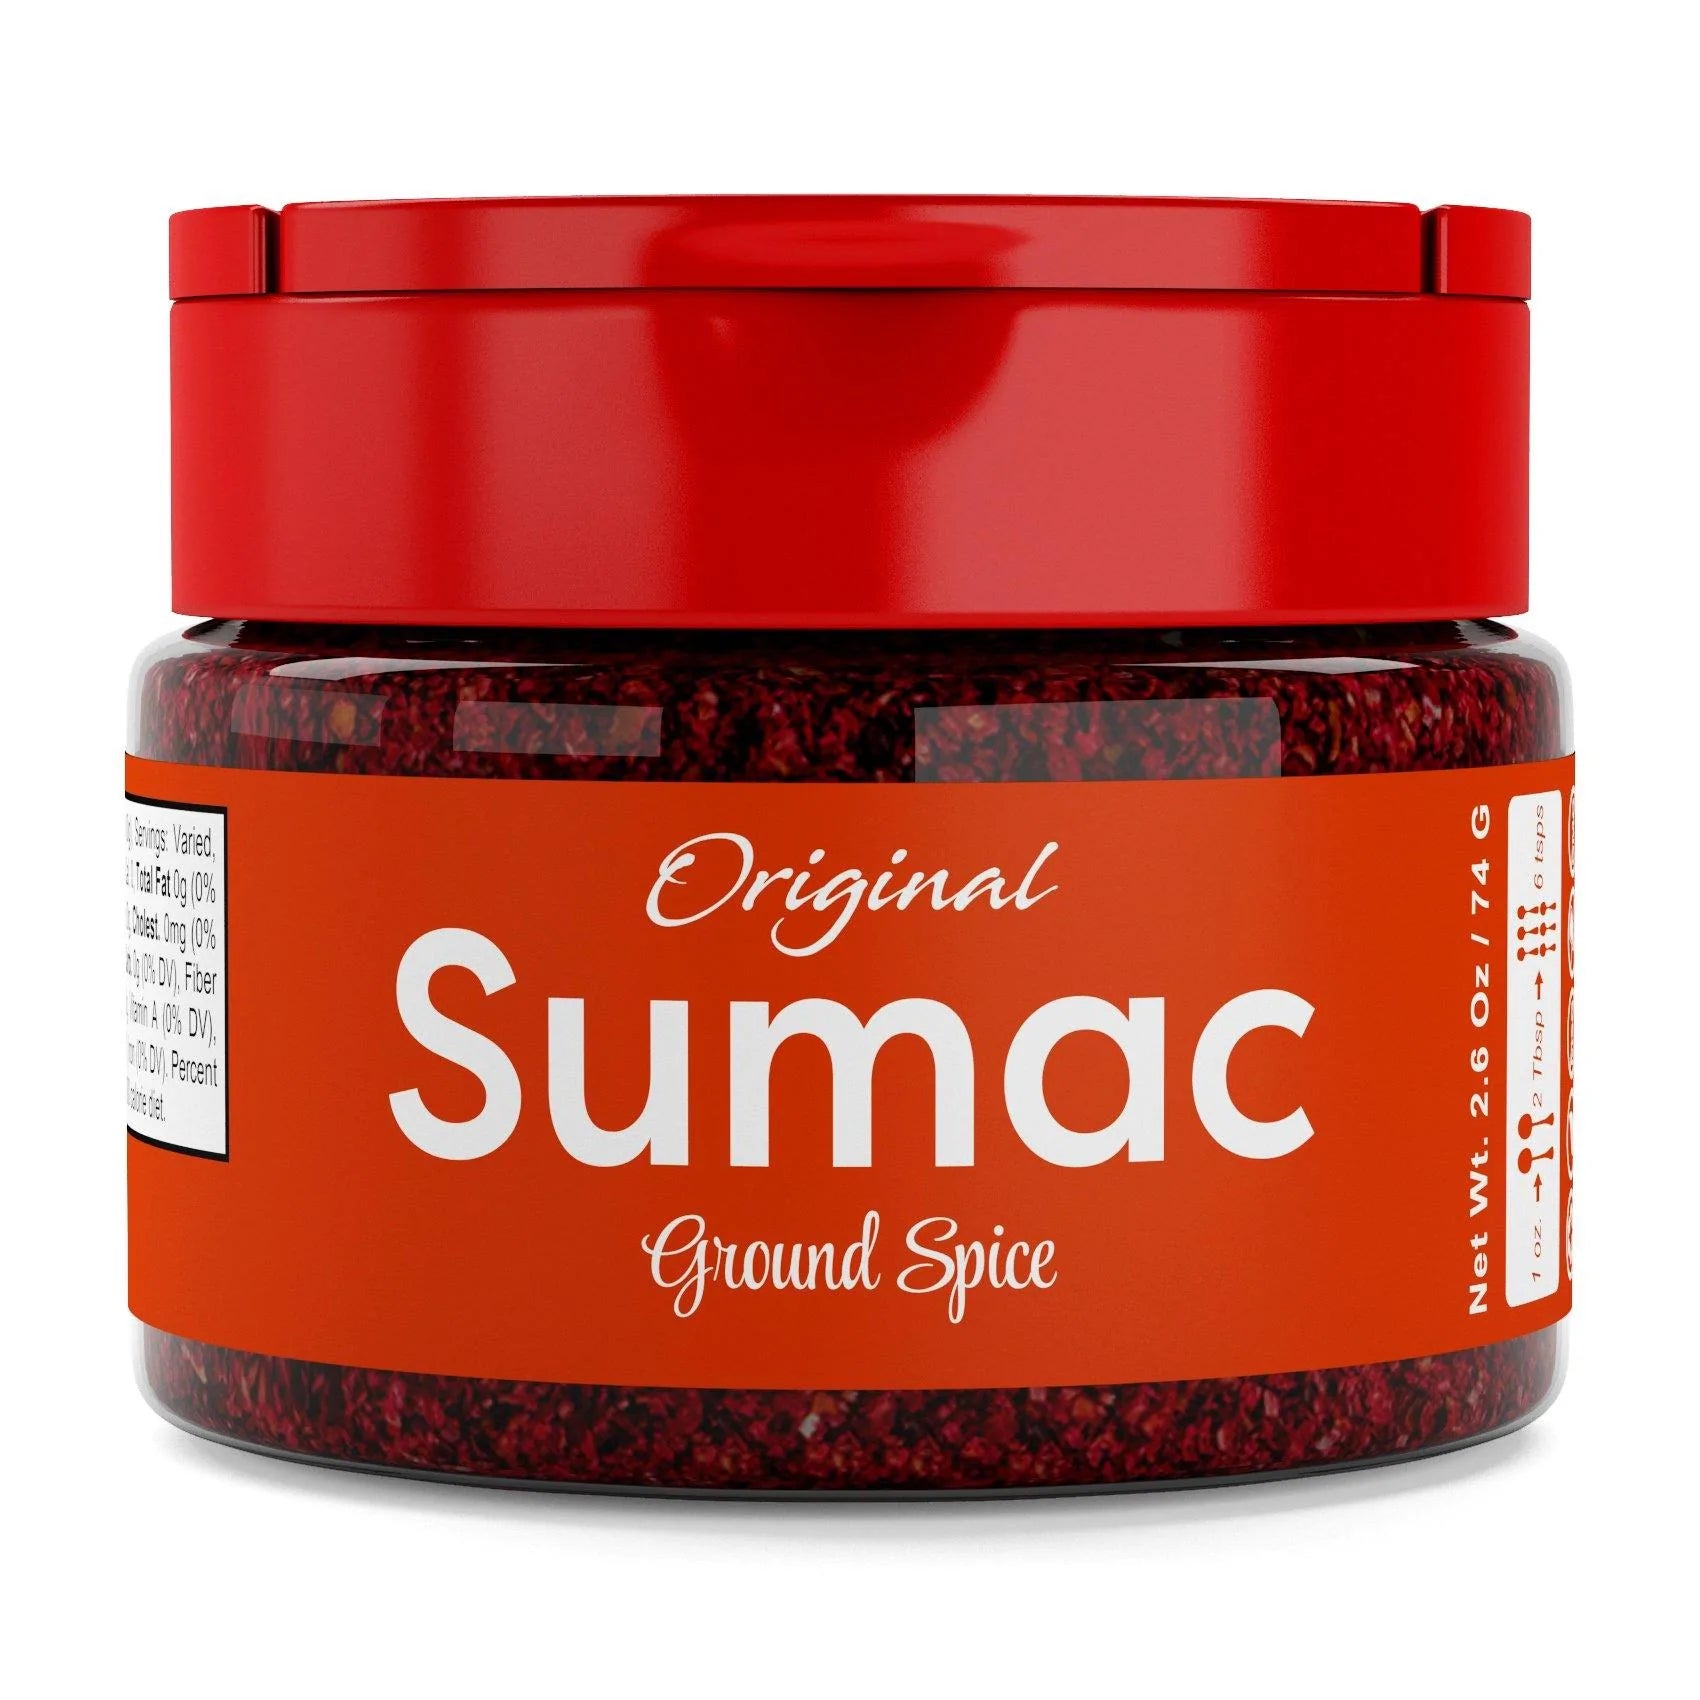 Sumac Ground